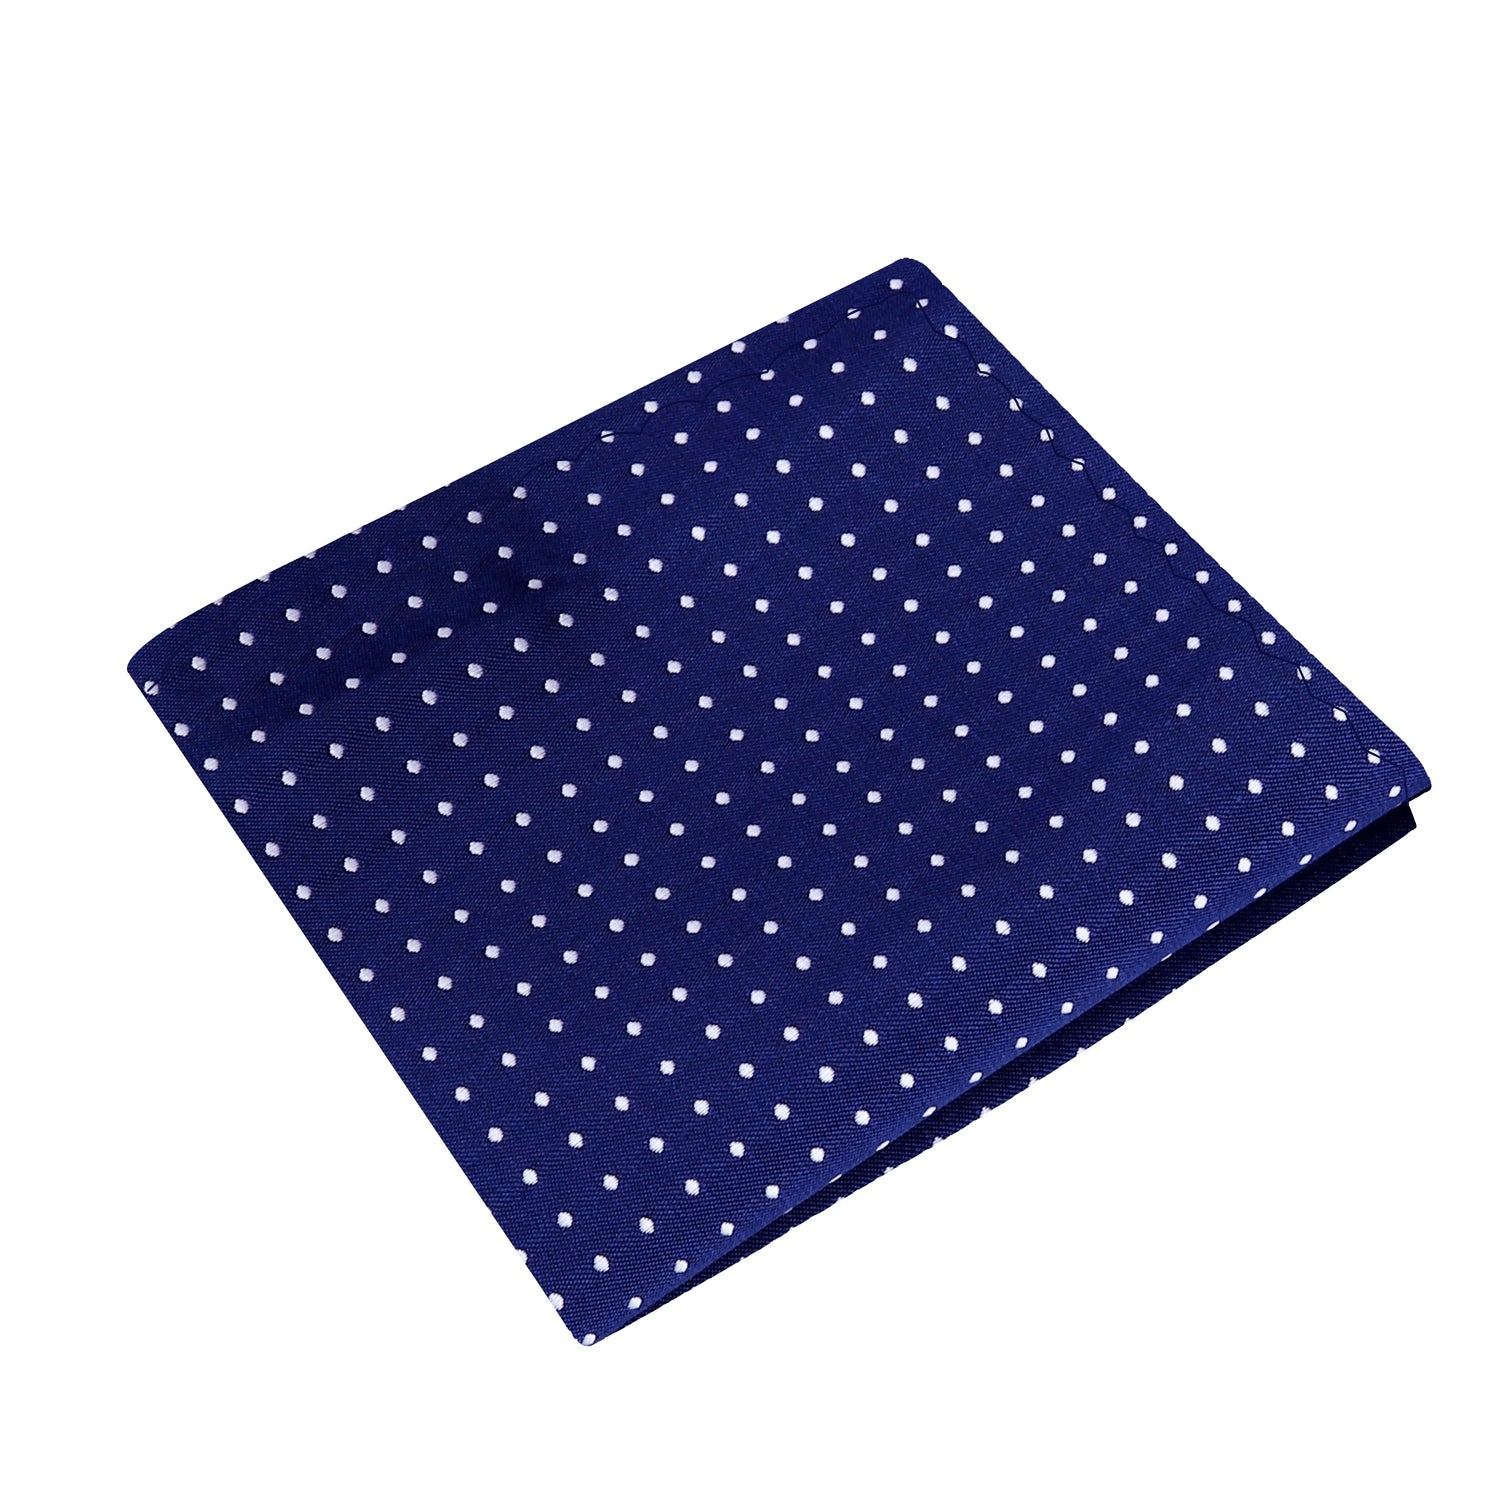 A Blue with White Polka Dot Pattern Silk Pocket Square